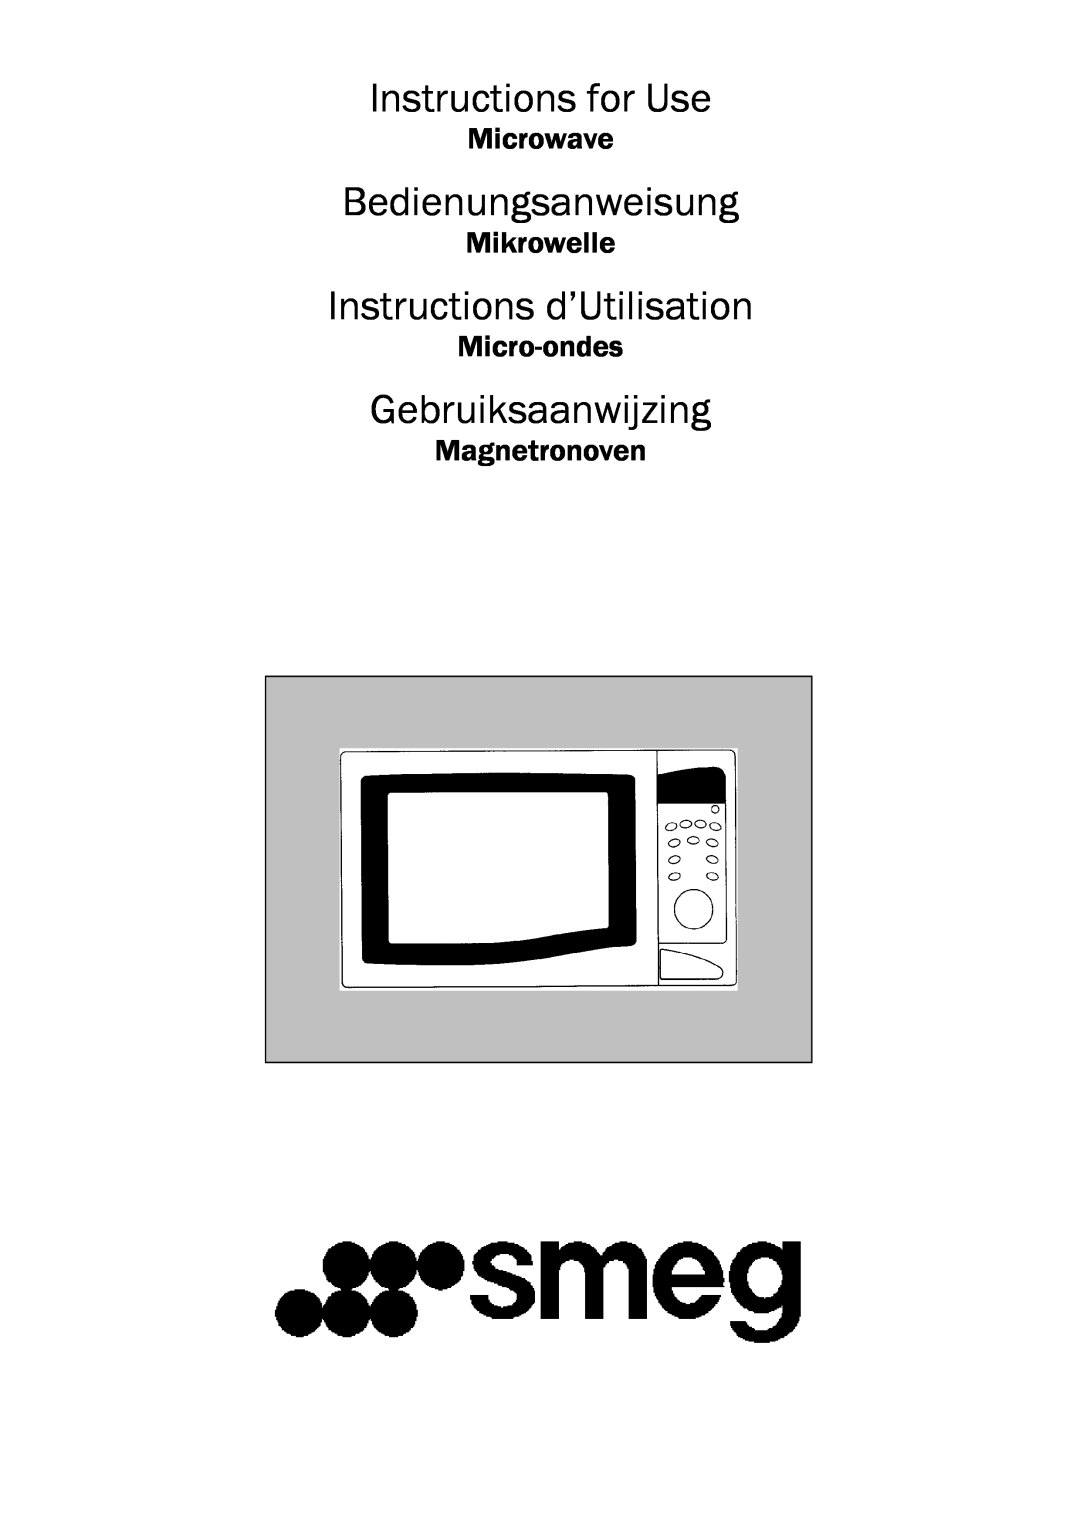 Smeg ME203FX manual Instructions for Use, Bedienungsanweisung, Instructions d’Utilisation, Gebruiksaanwijzing, Microwave 